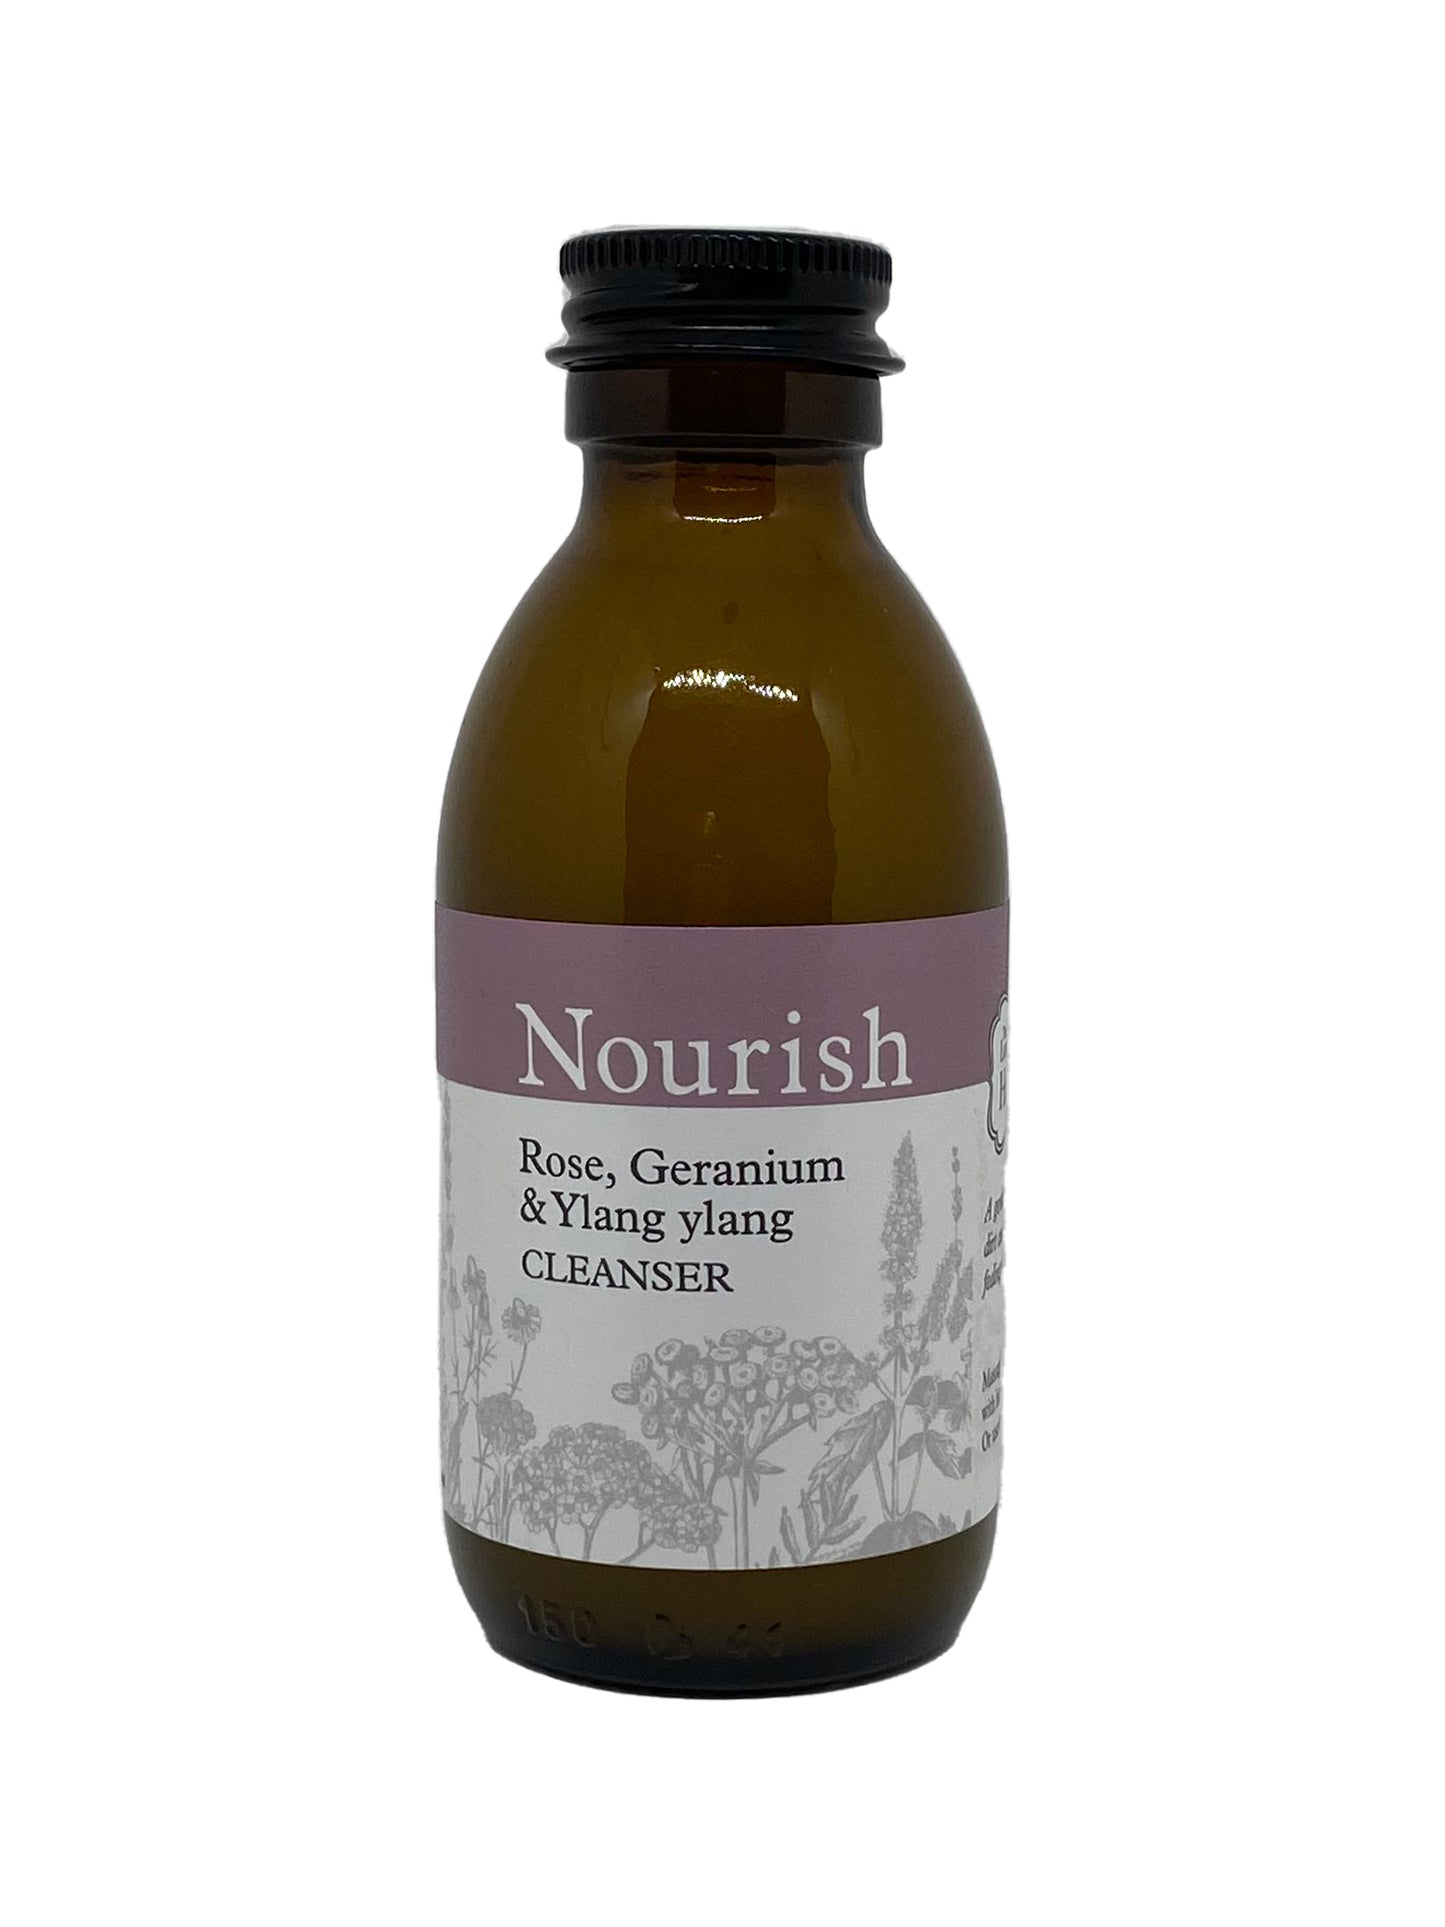 Nourish: Rose, Geranium & Ylang Ylang Cleanser